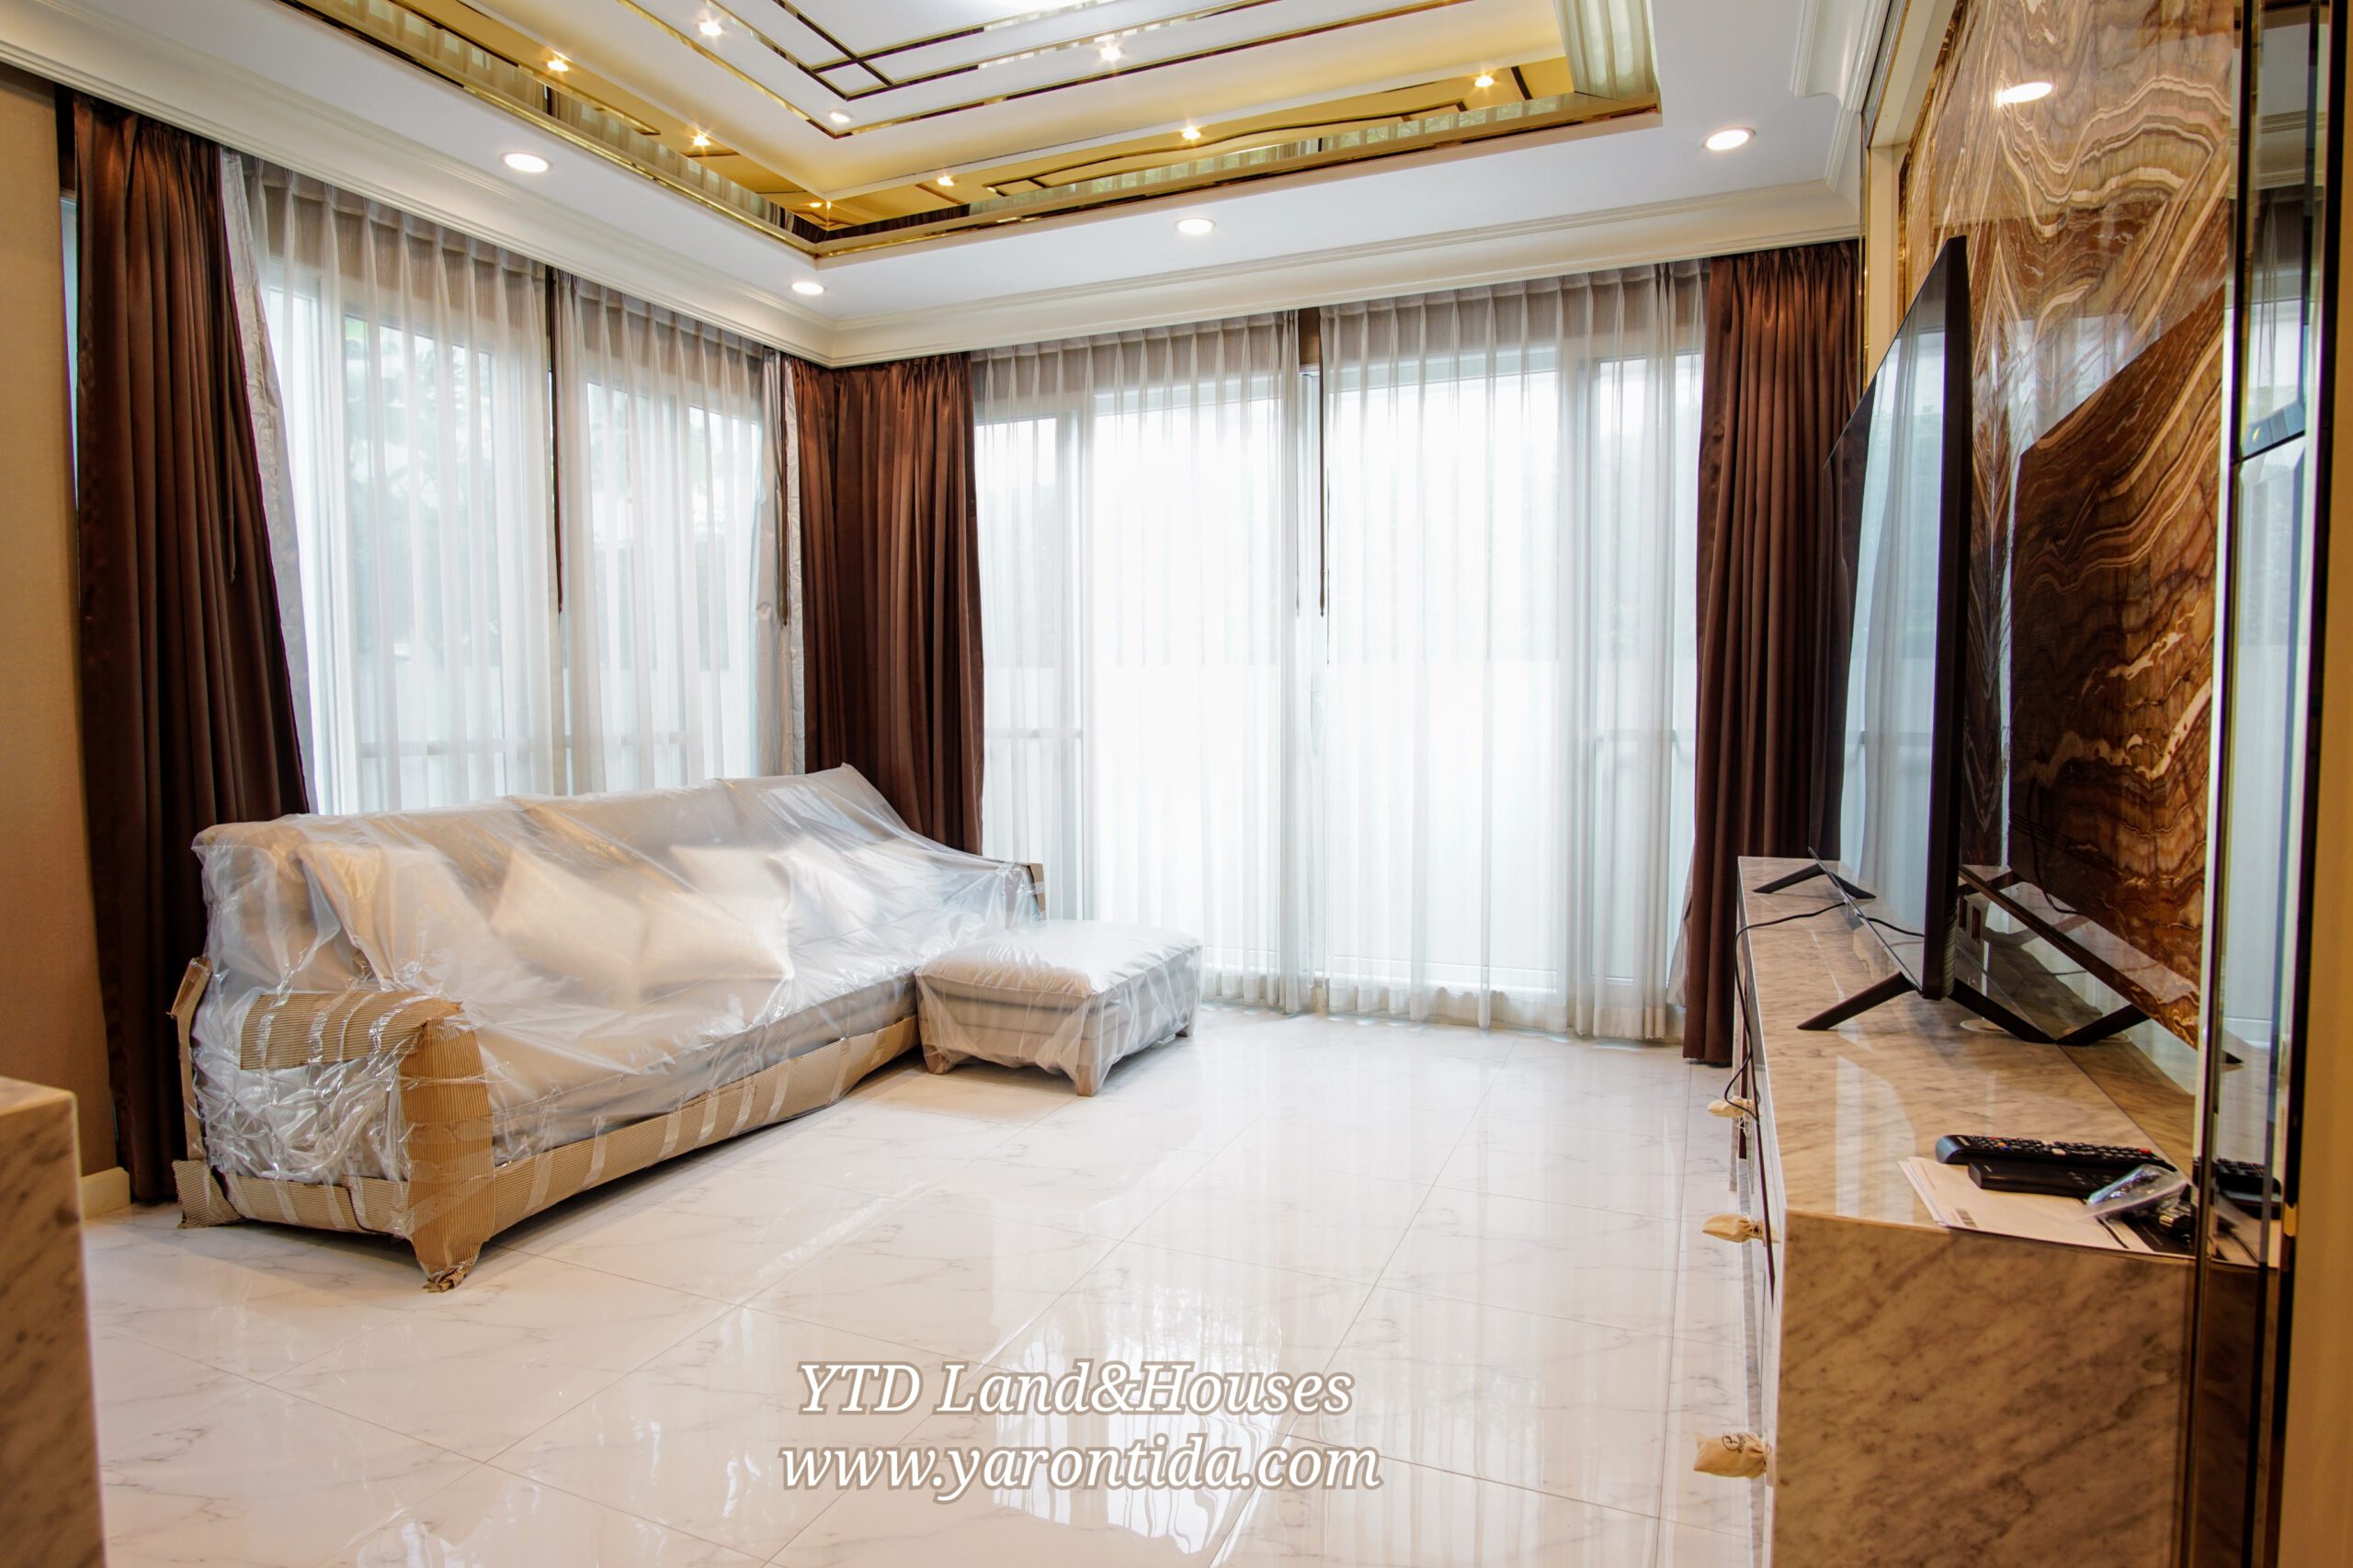 Luxury House for Rent at Nantawan Bangna km7 200,000 Baht/month ให้เช่าบ้านหรู นันทวัน บางนา กม7 ค่าเช่า : 200,000 บาท/เดือน